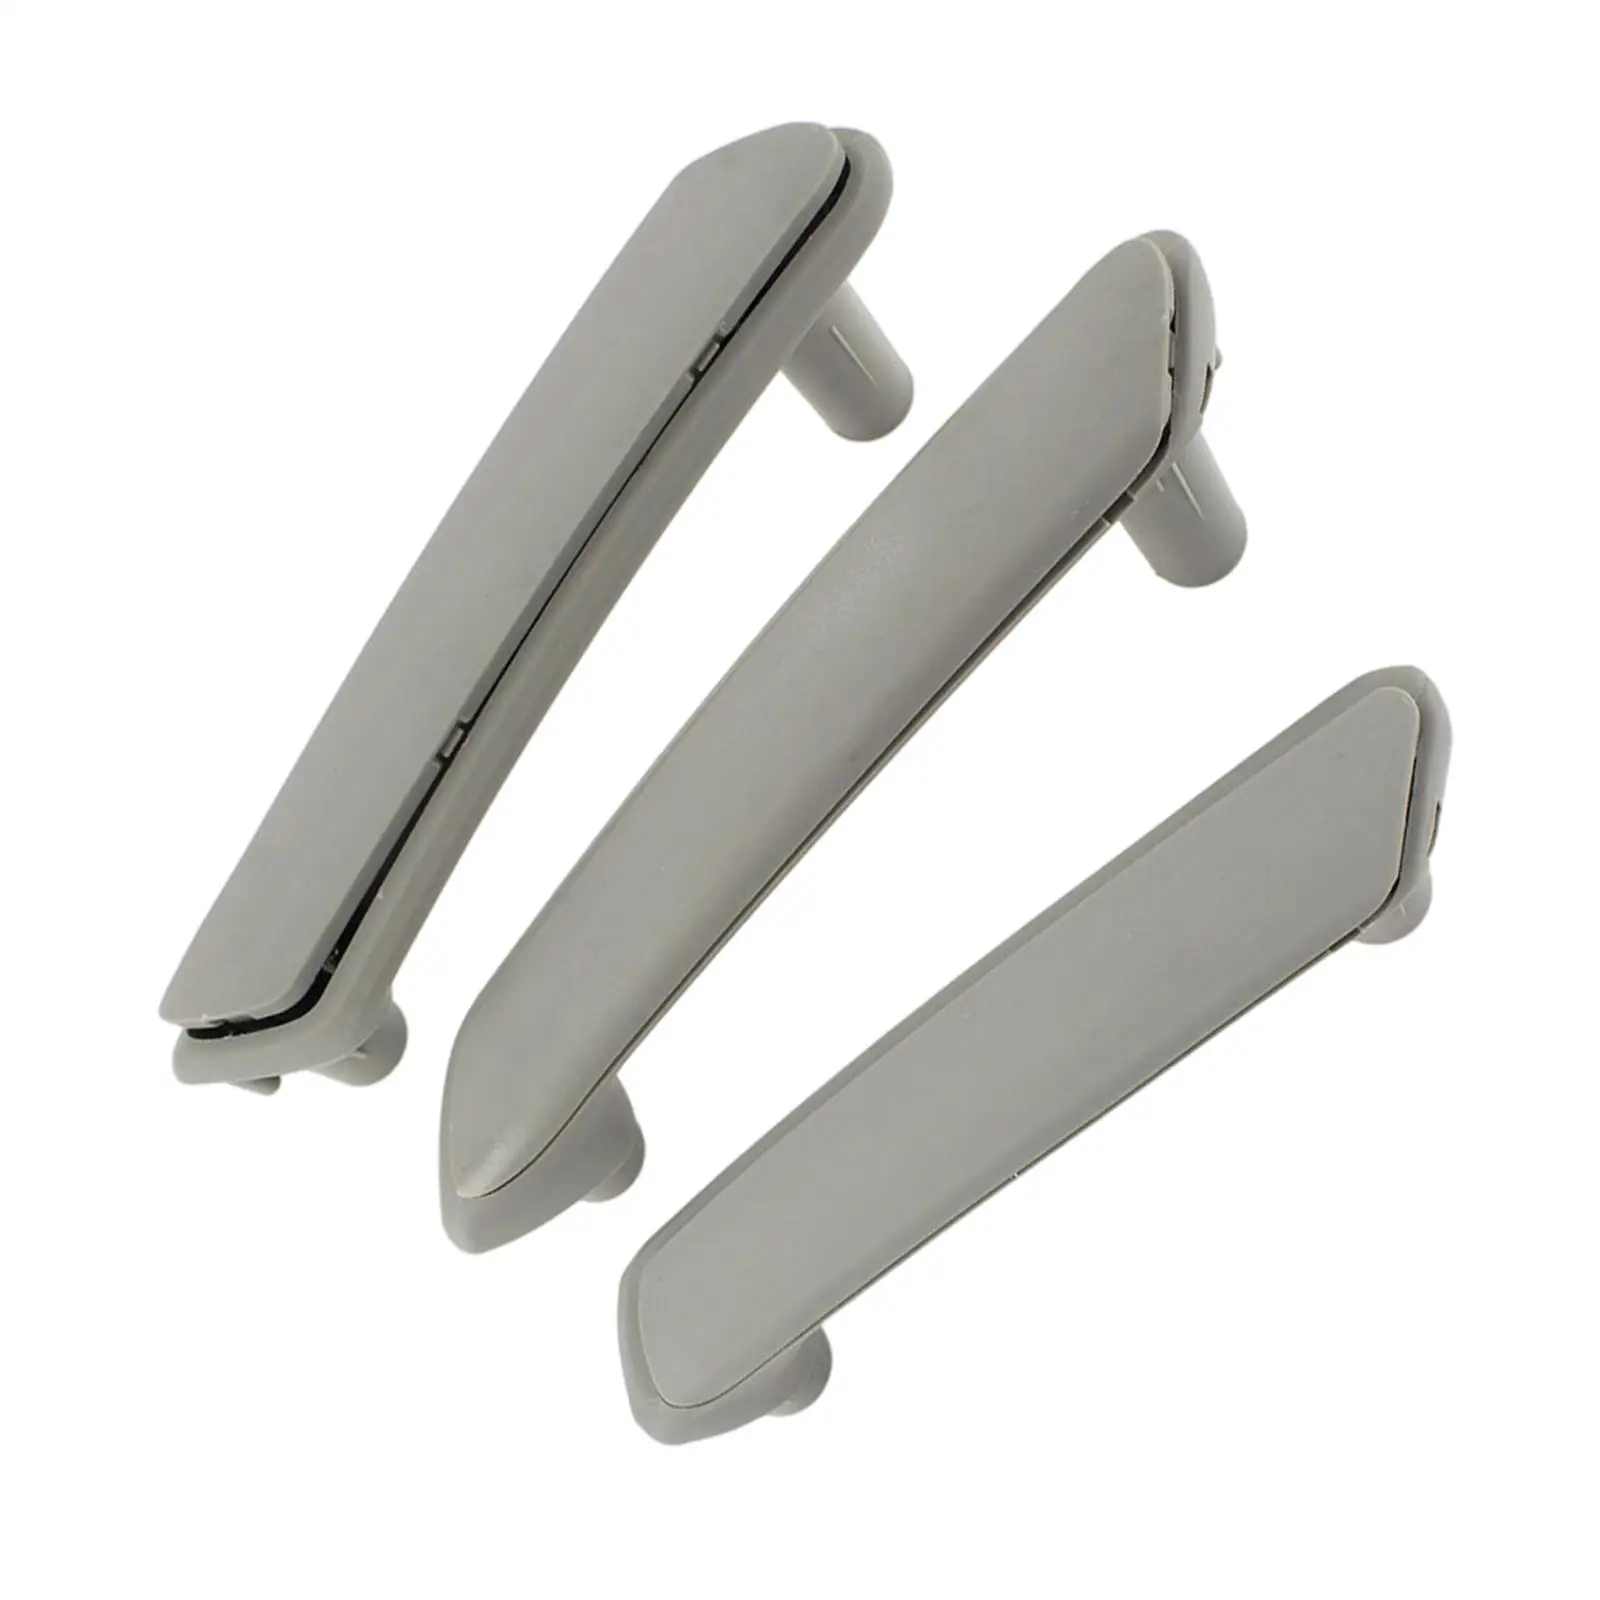 3Pcs Kit Interior Door Pull Grab Handle Direct Replaces Premium Material, 1 Piece Short handle 2 Pieces Long handles